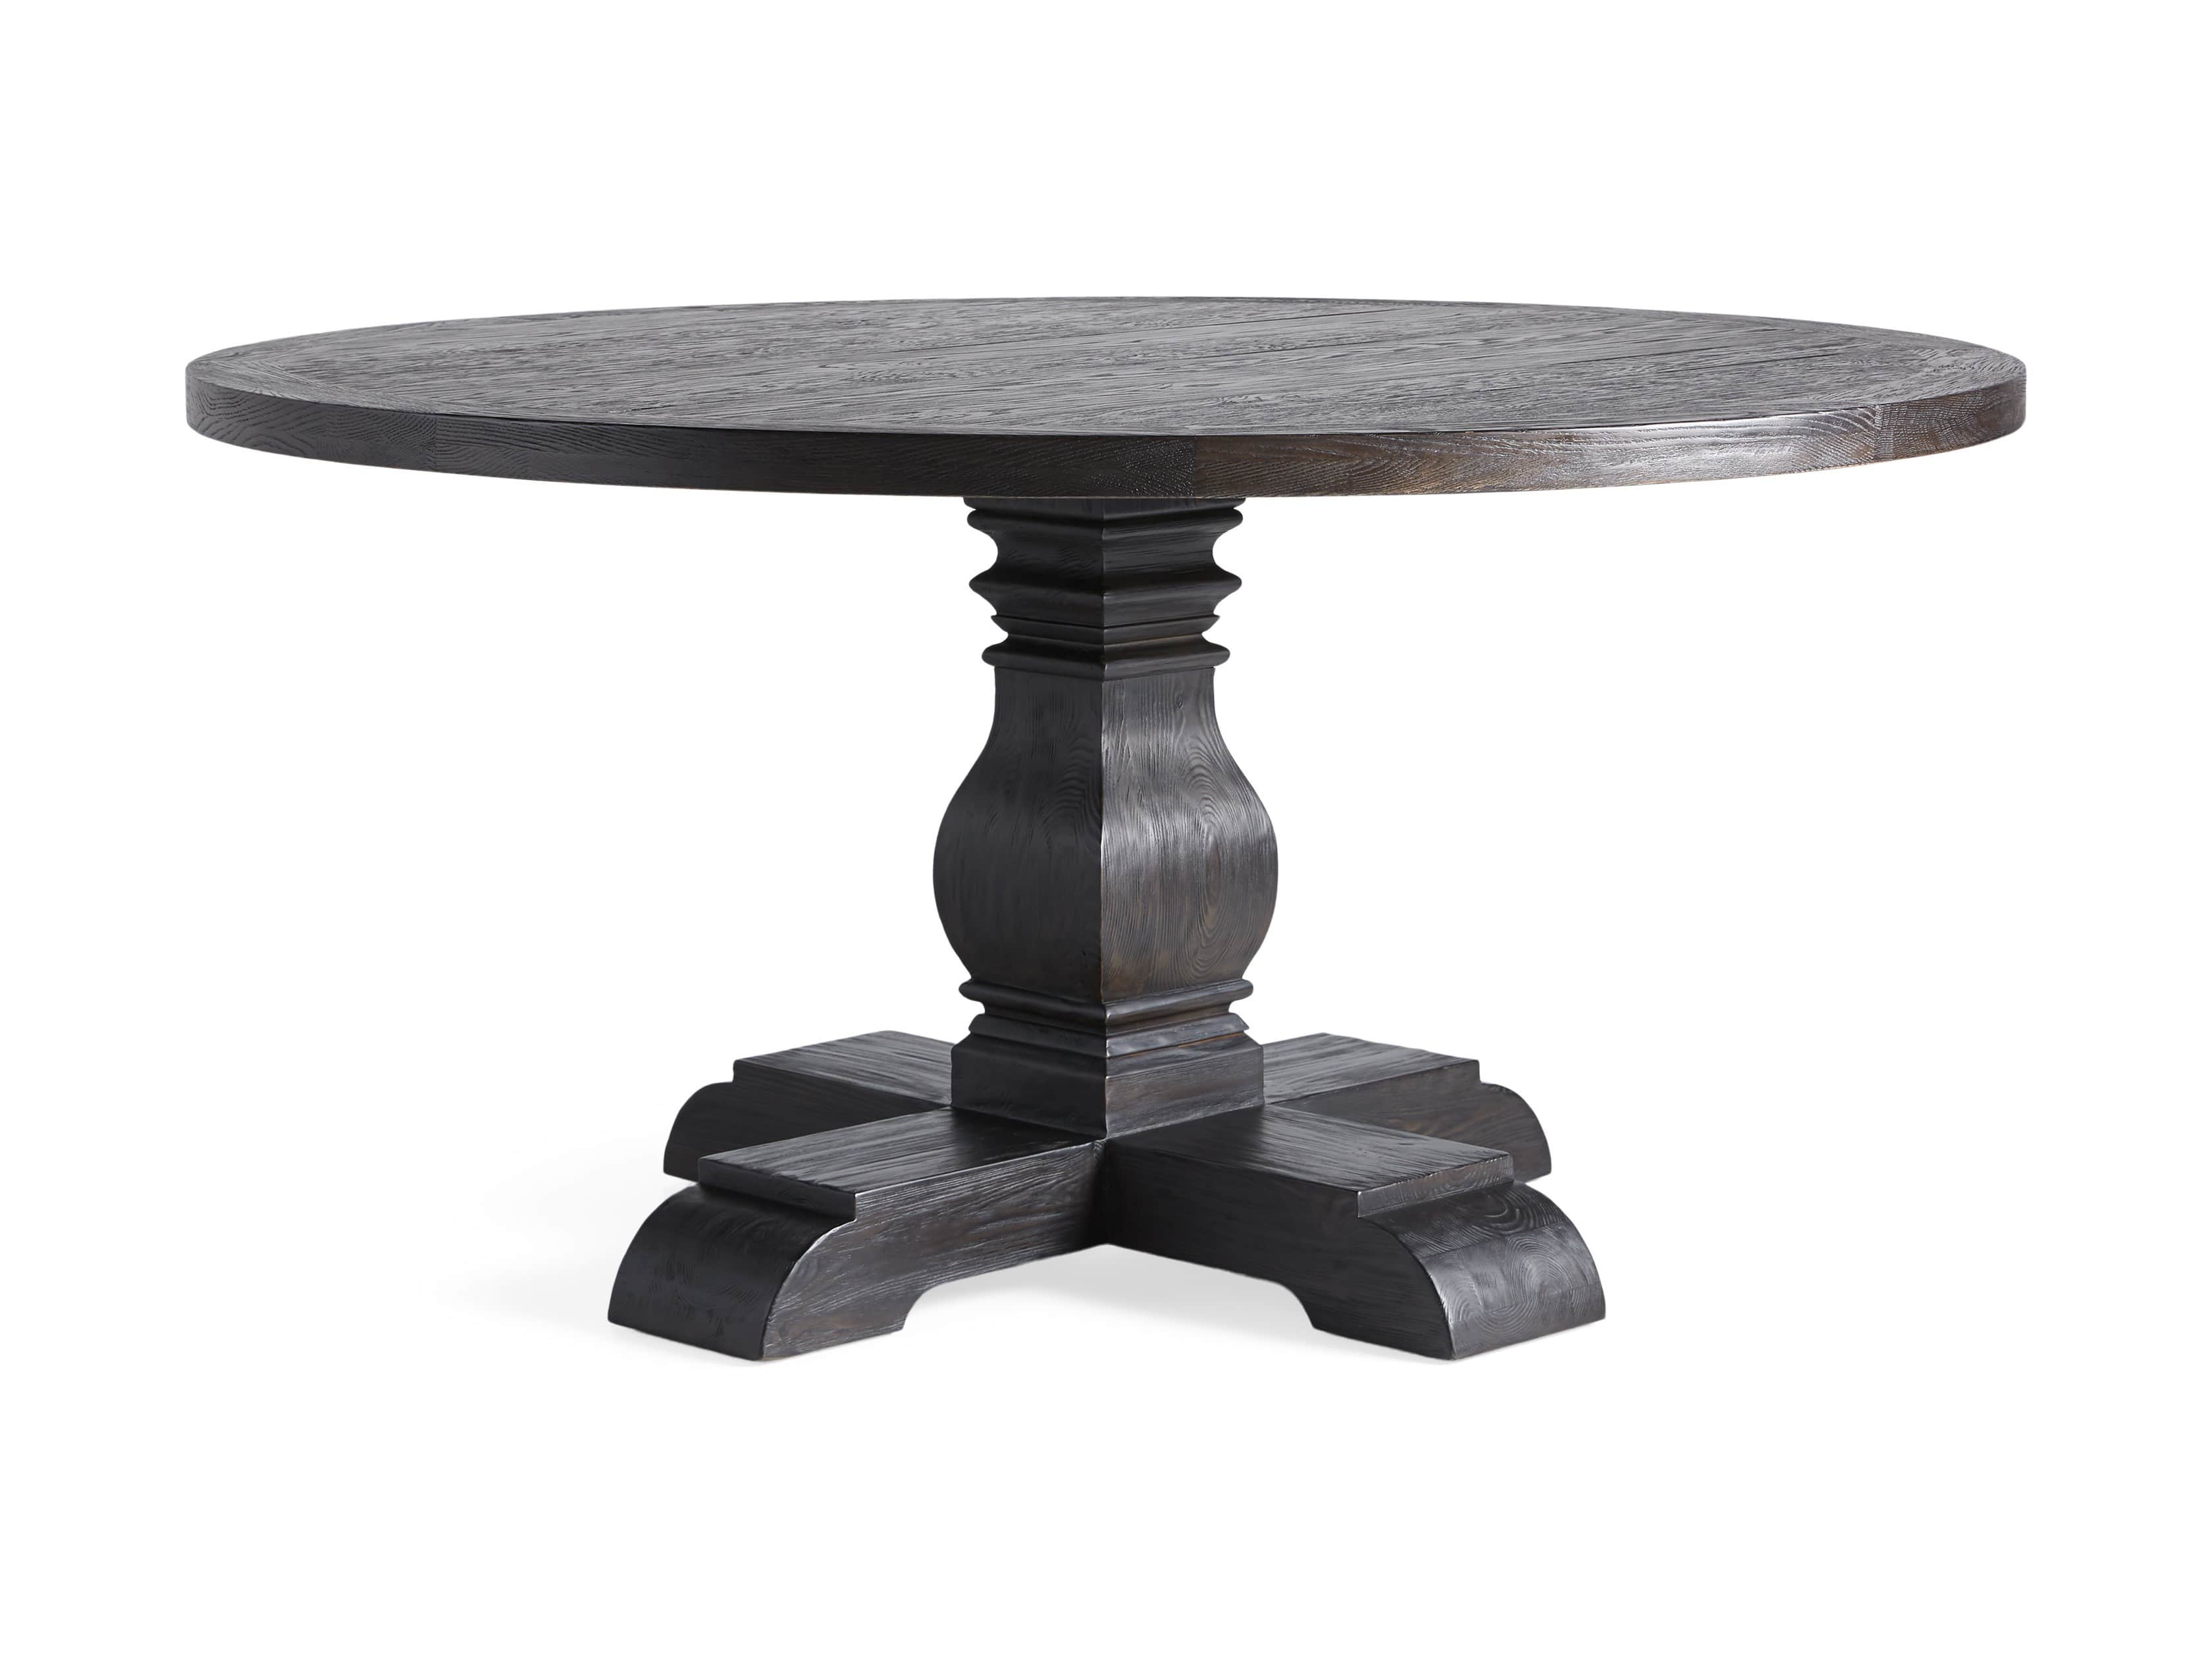 Kensington Round Dining Table Arhaus, 60 Inch Round Black Pedestal Table